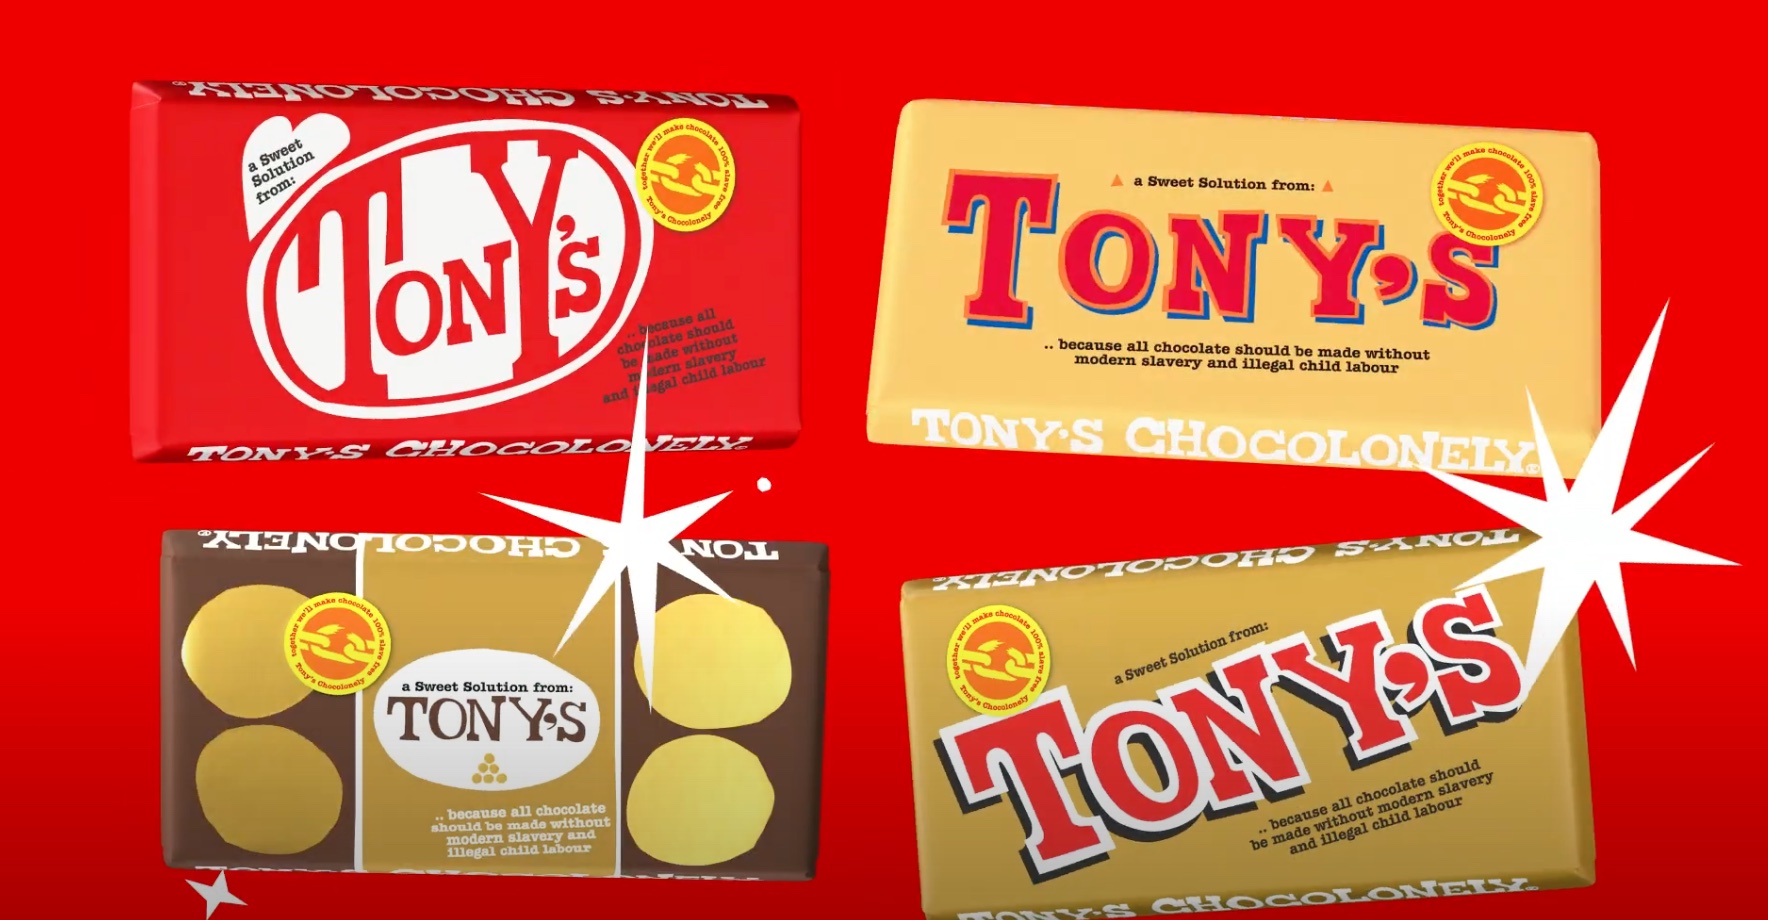 Tony's Chocolonely sensibiliseert voort slavernij en kinderarbeid